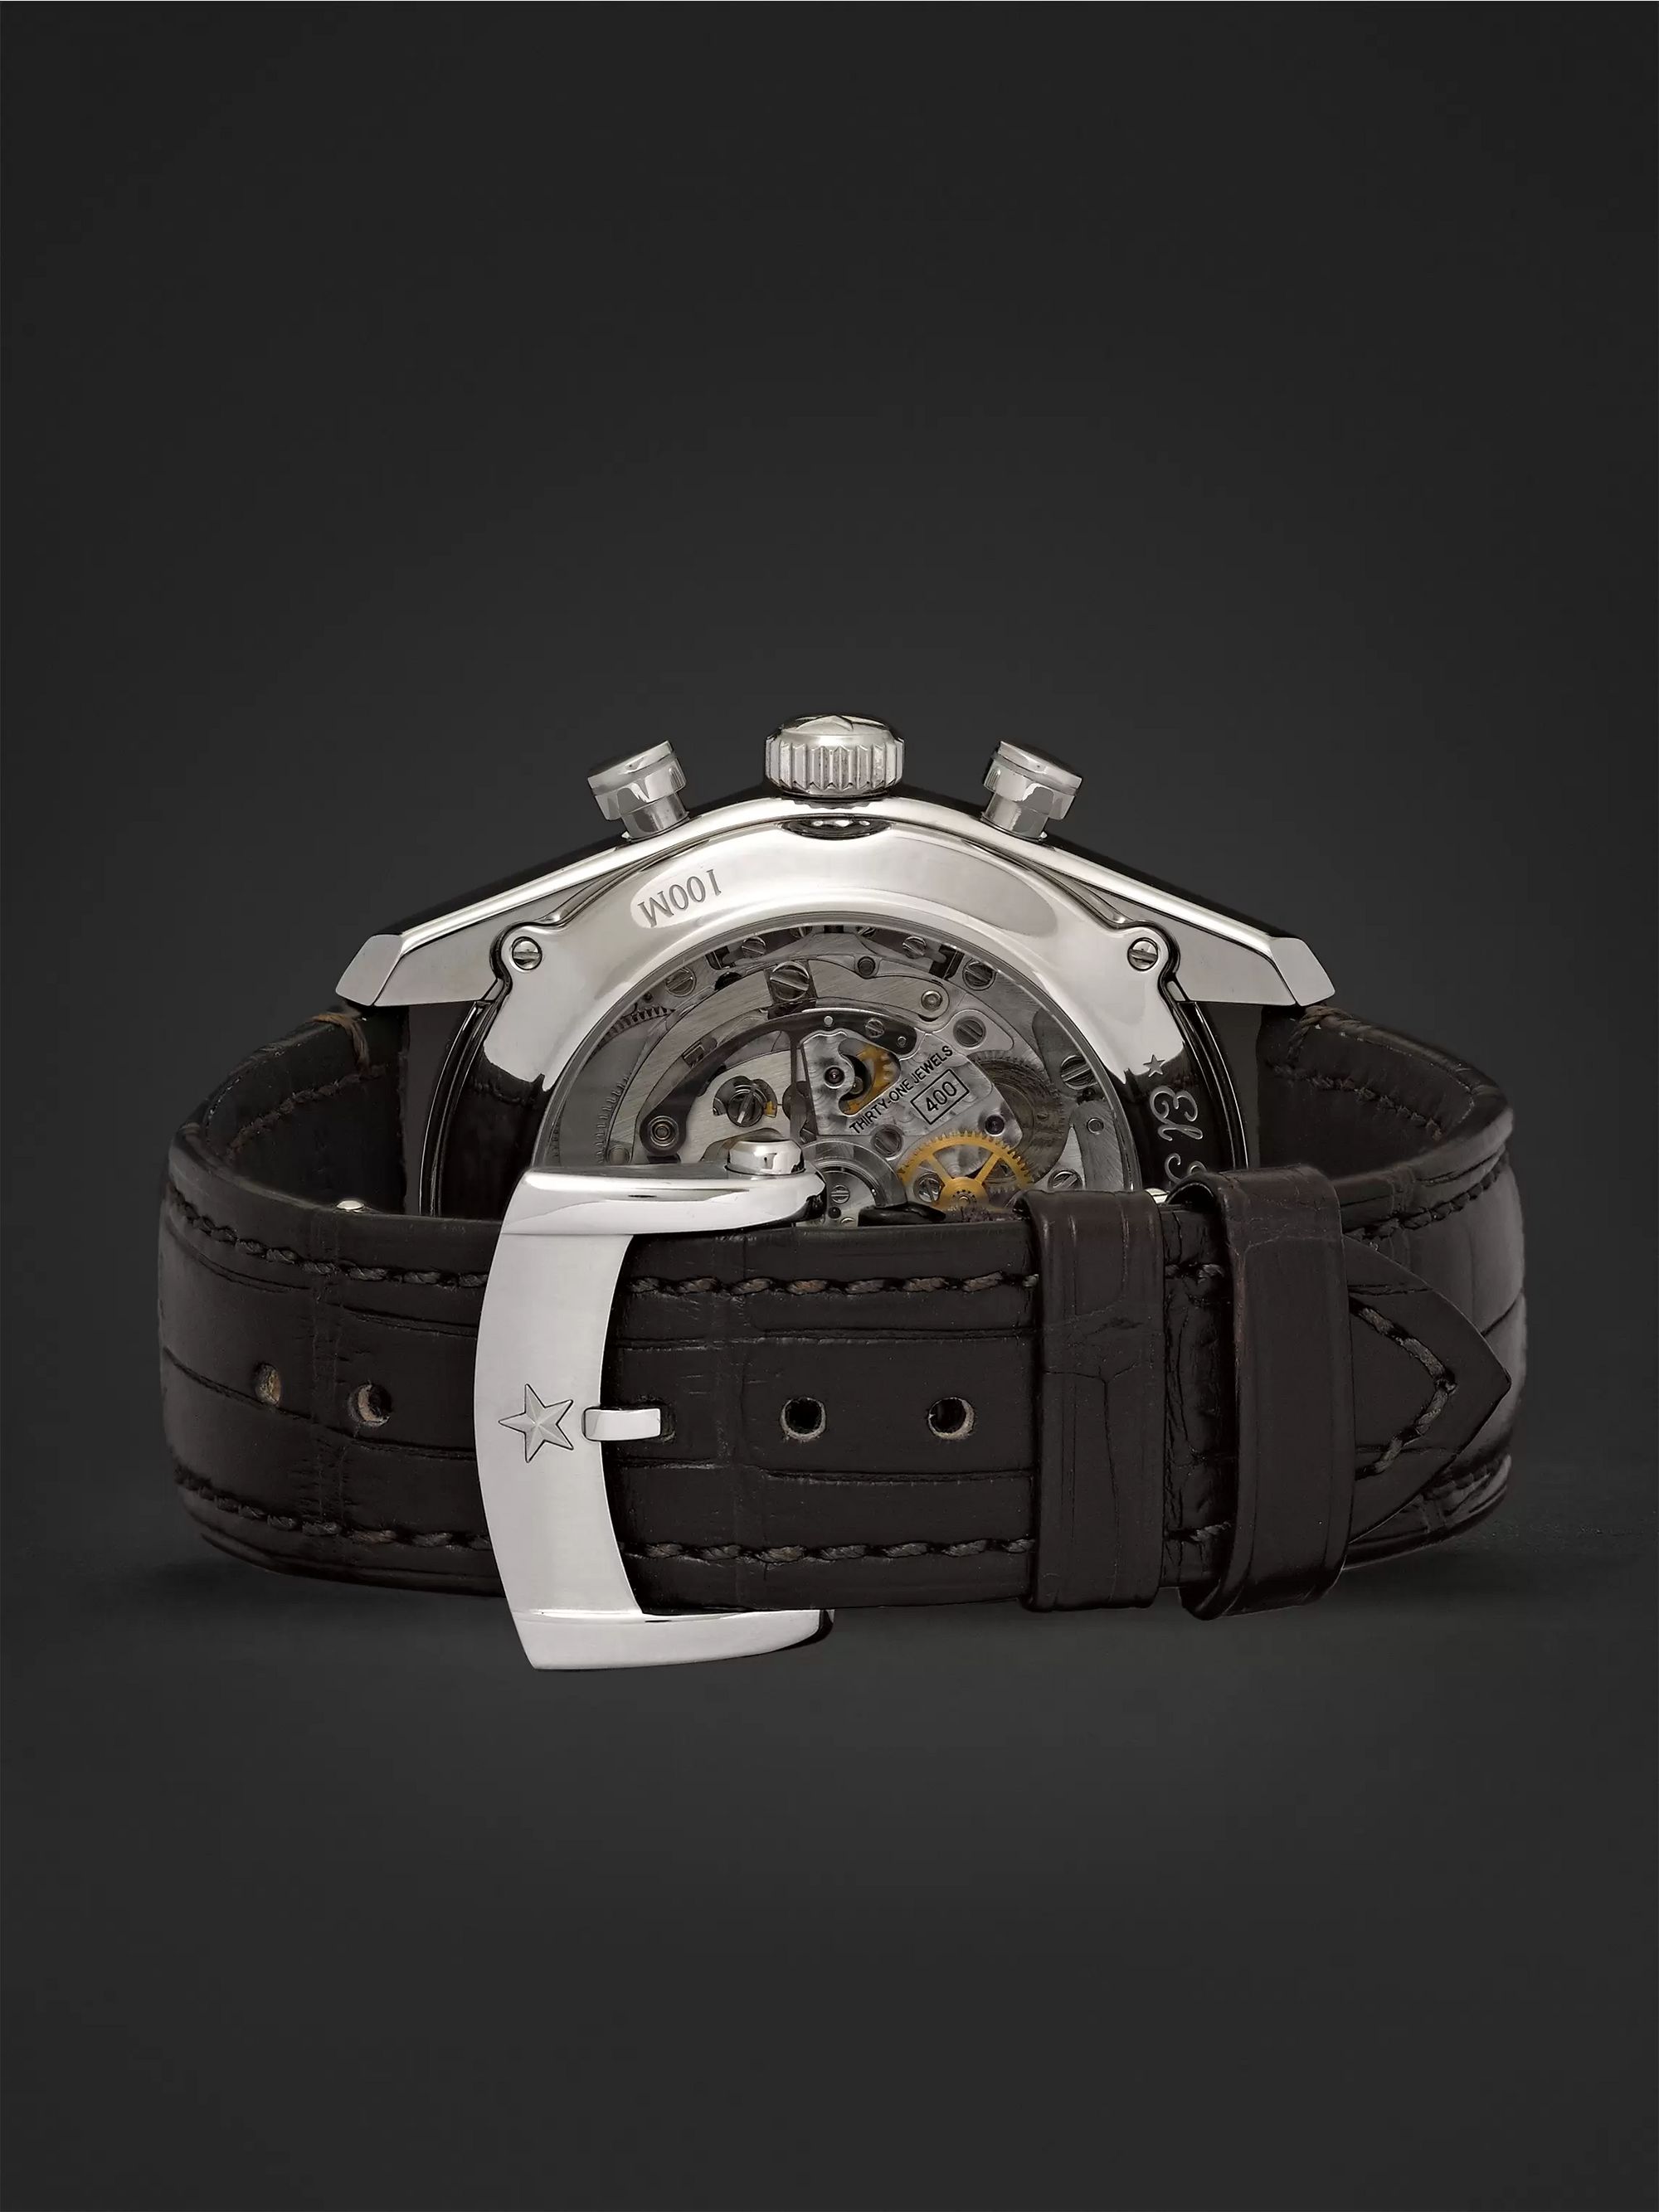 ZENITH El Primero 42mm Stainless Steel and Alligator Watch, Ref. No. 03.2080.400/01.C494